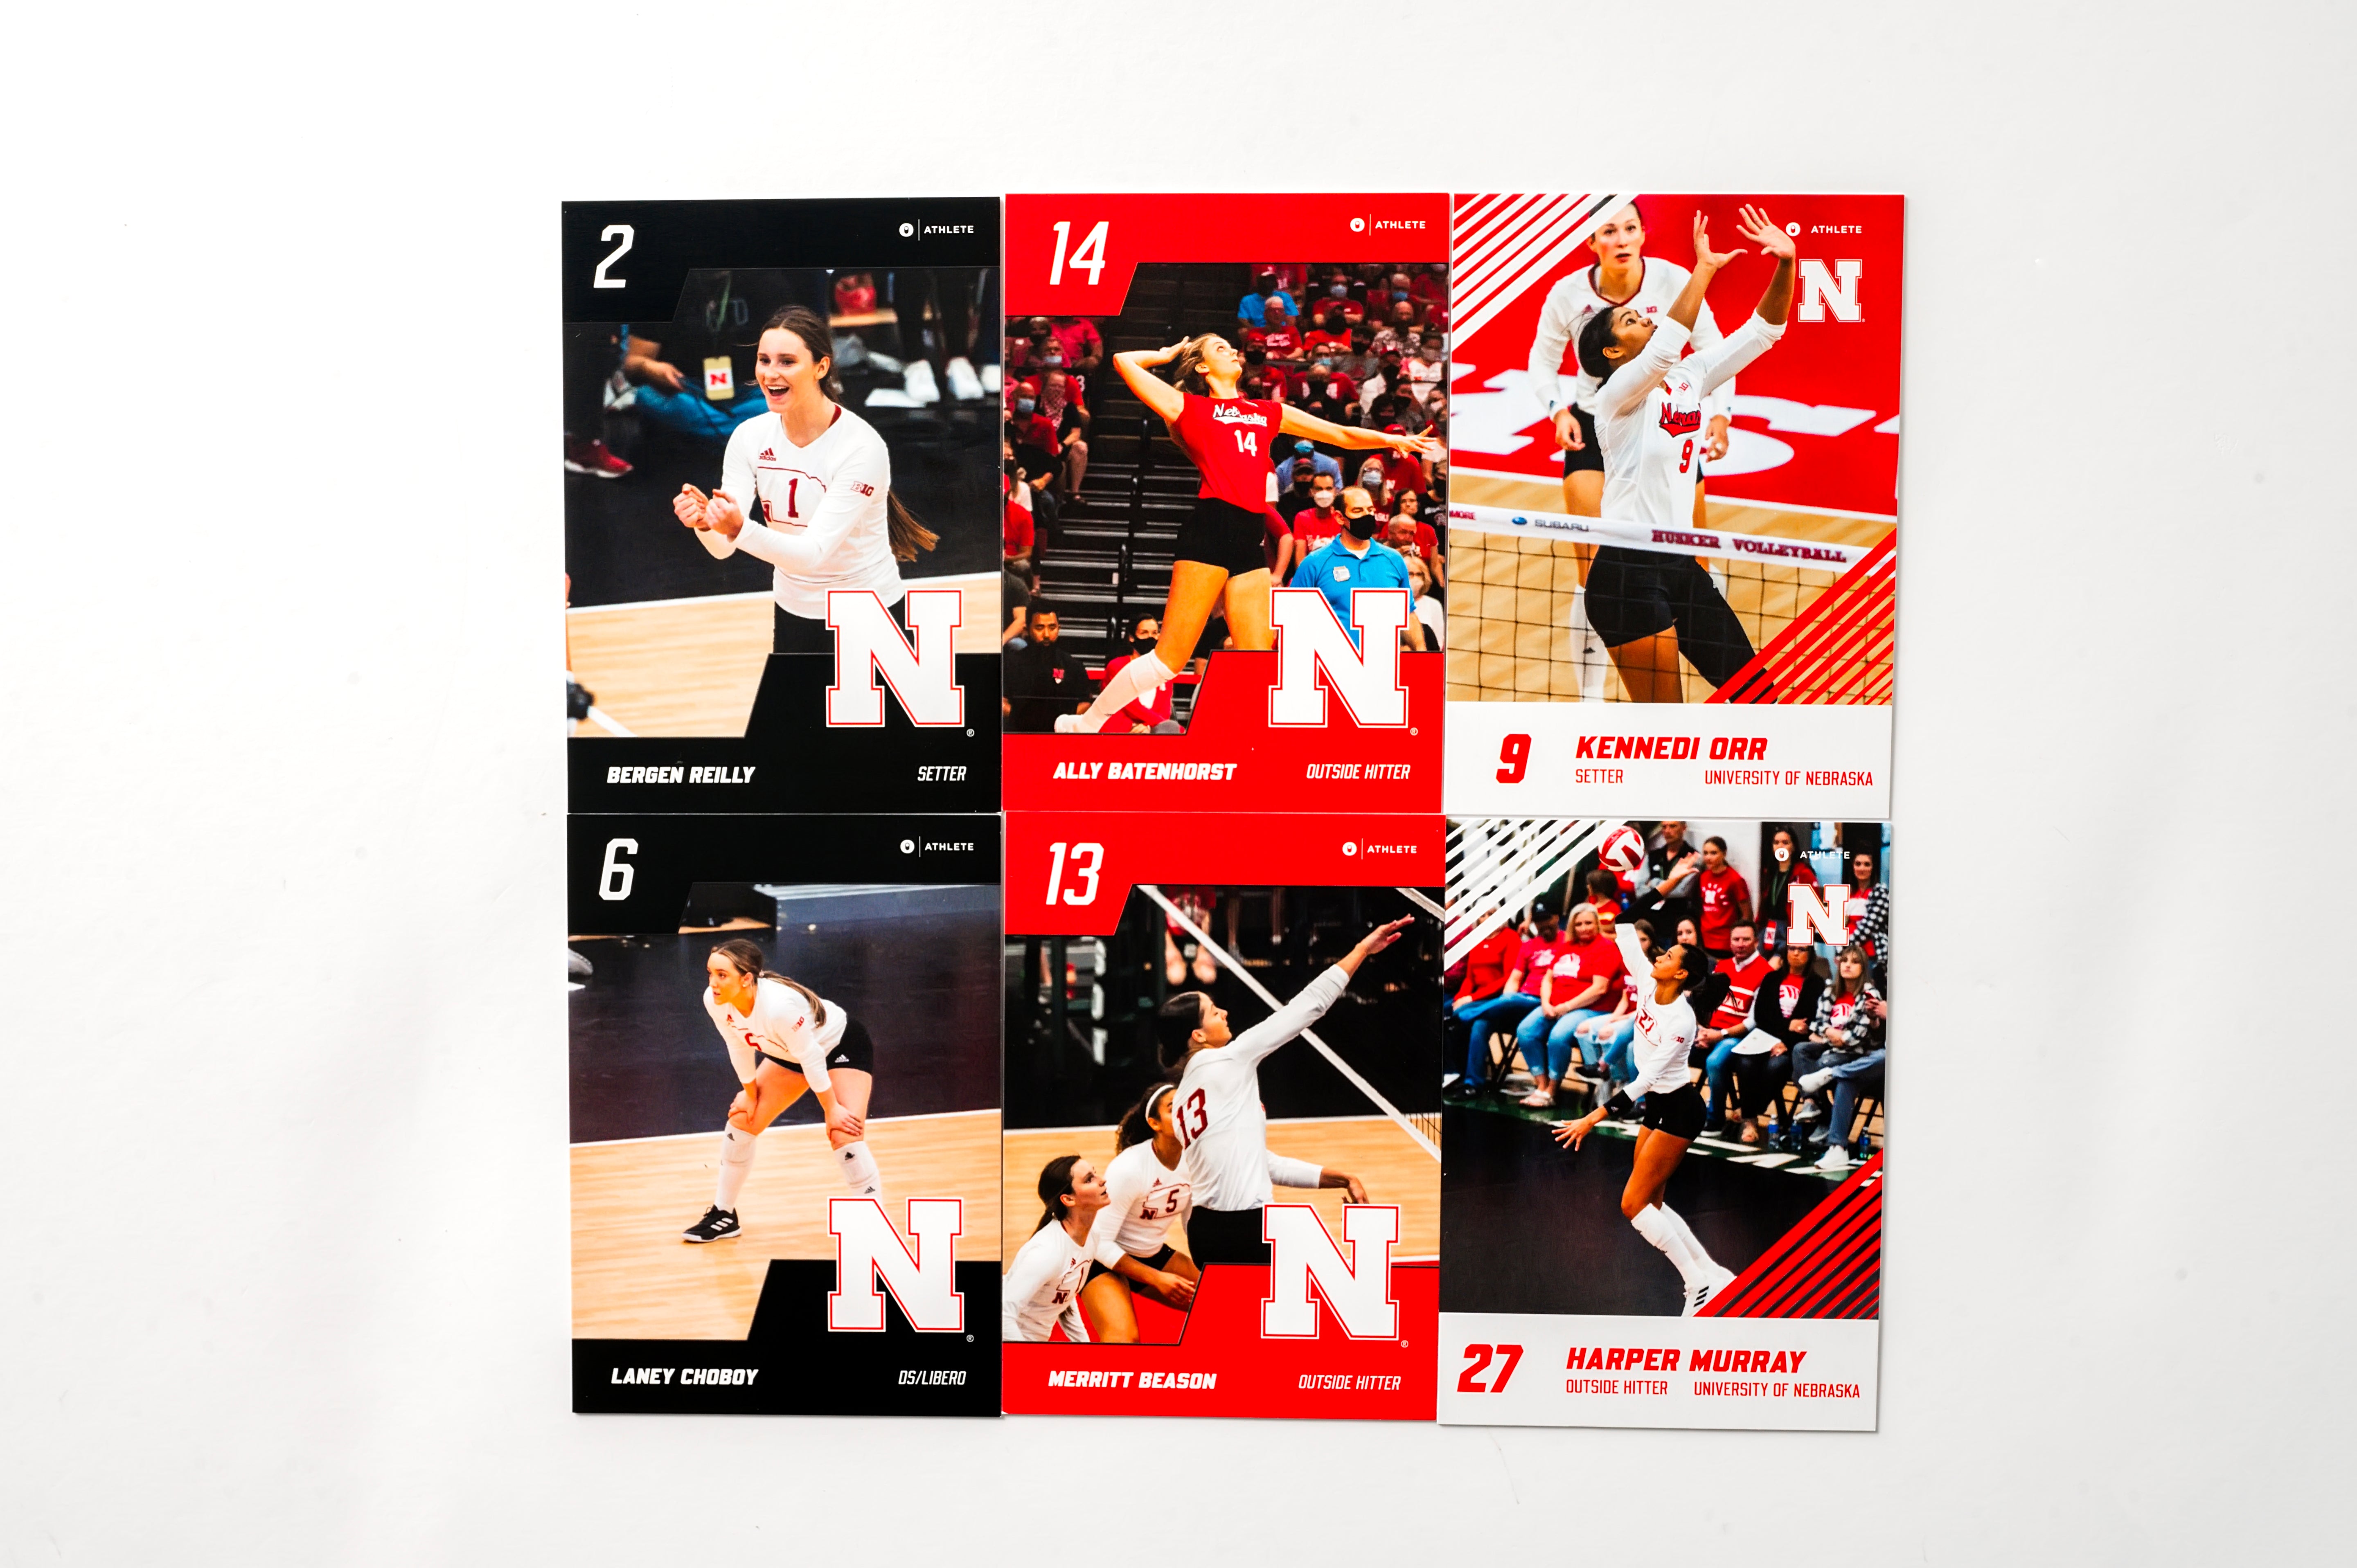 University of Nebraska® NIL Volleyball - 2023 Trading Cards - Single Pack